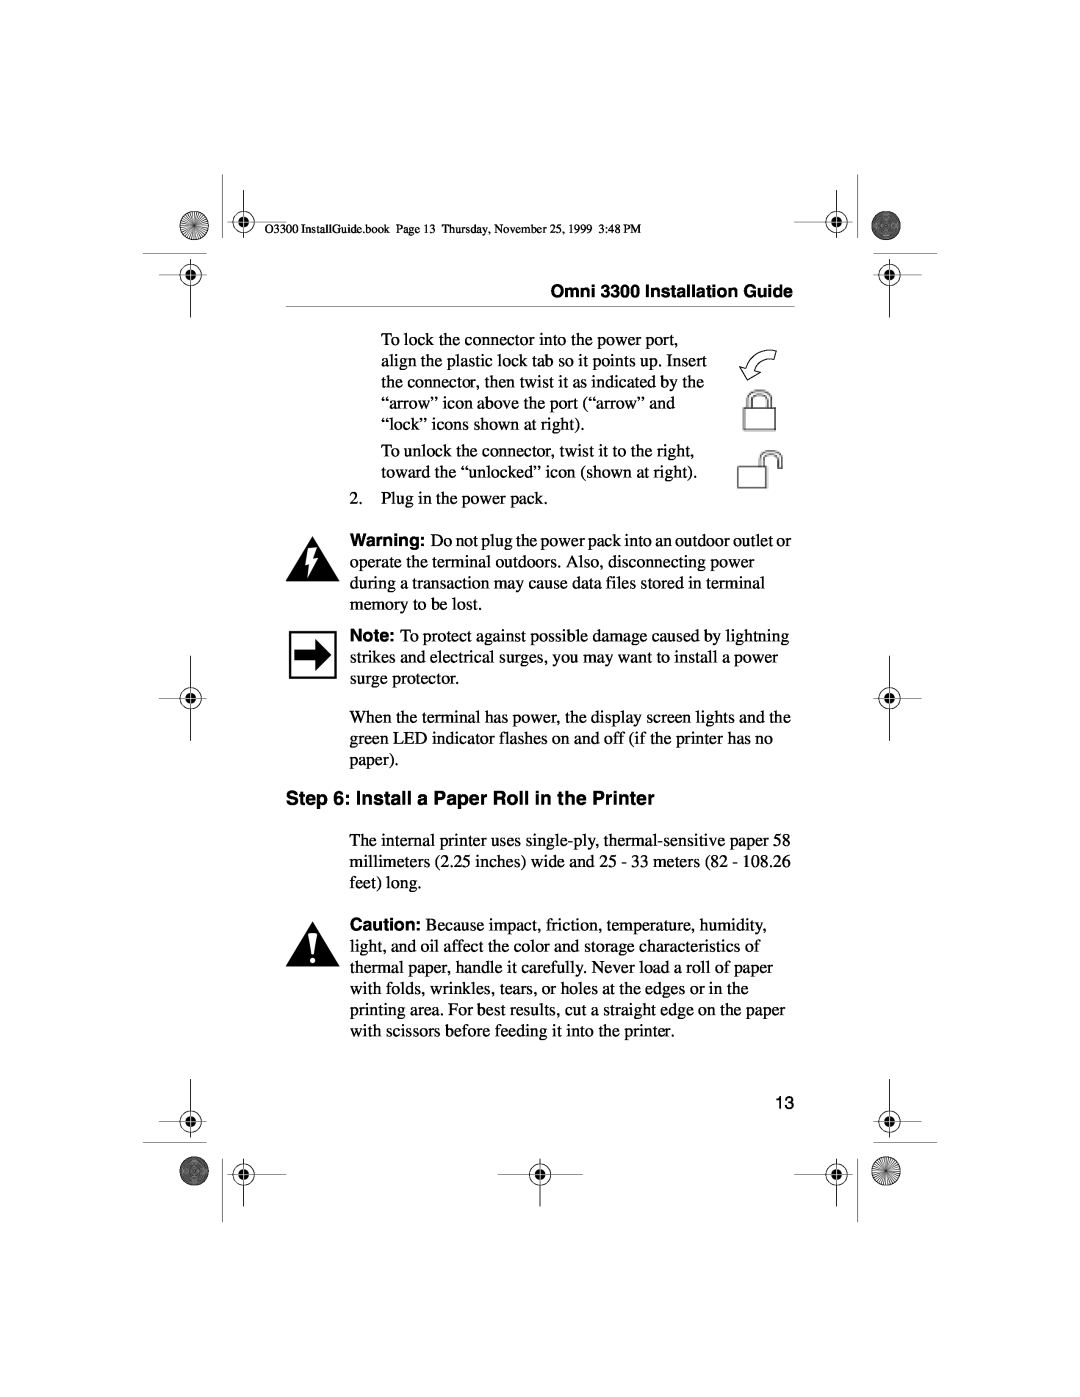 VeriFone manual Install a Paper Roll in the Printer, Omni 3300 Installation Guide 